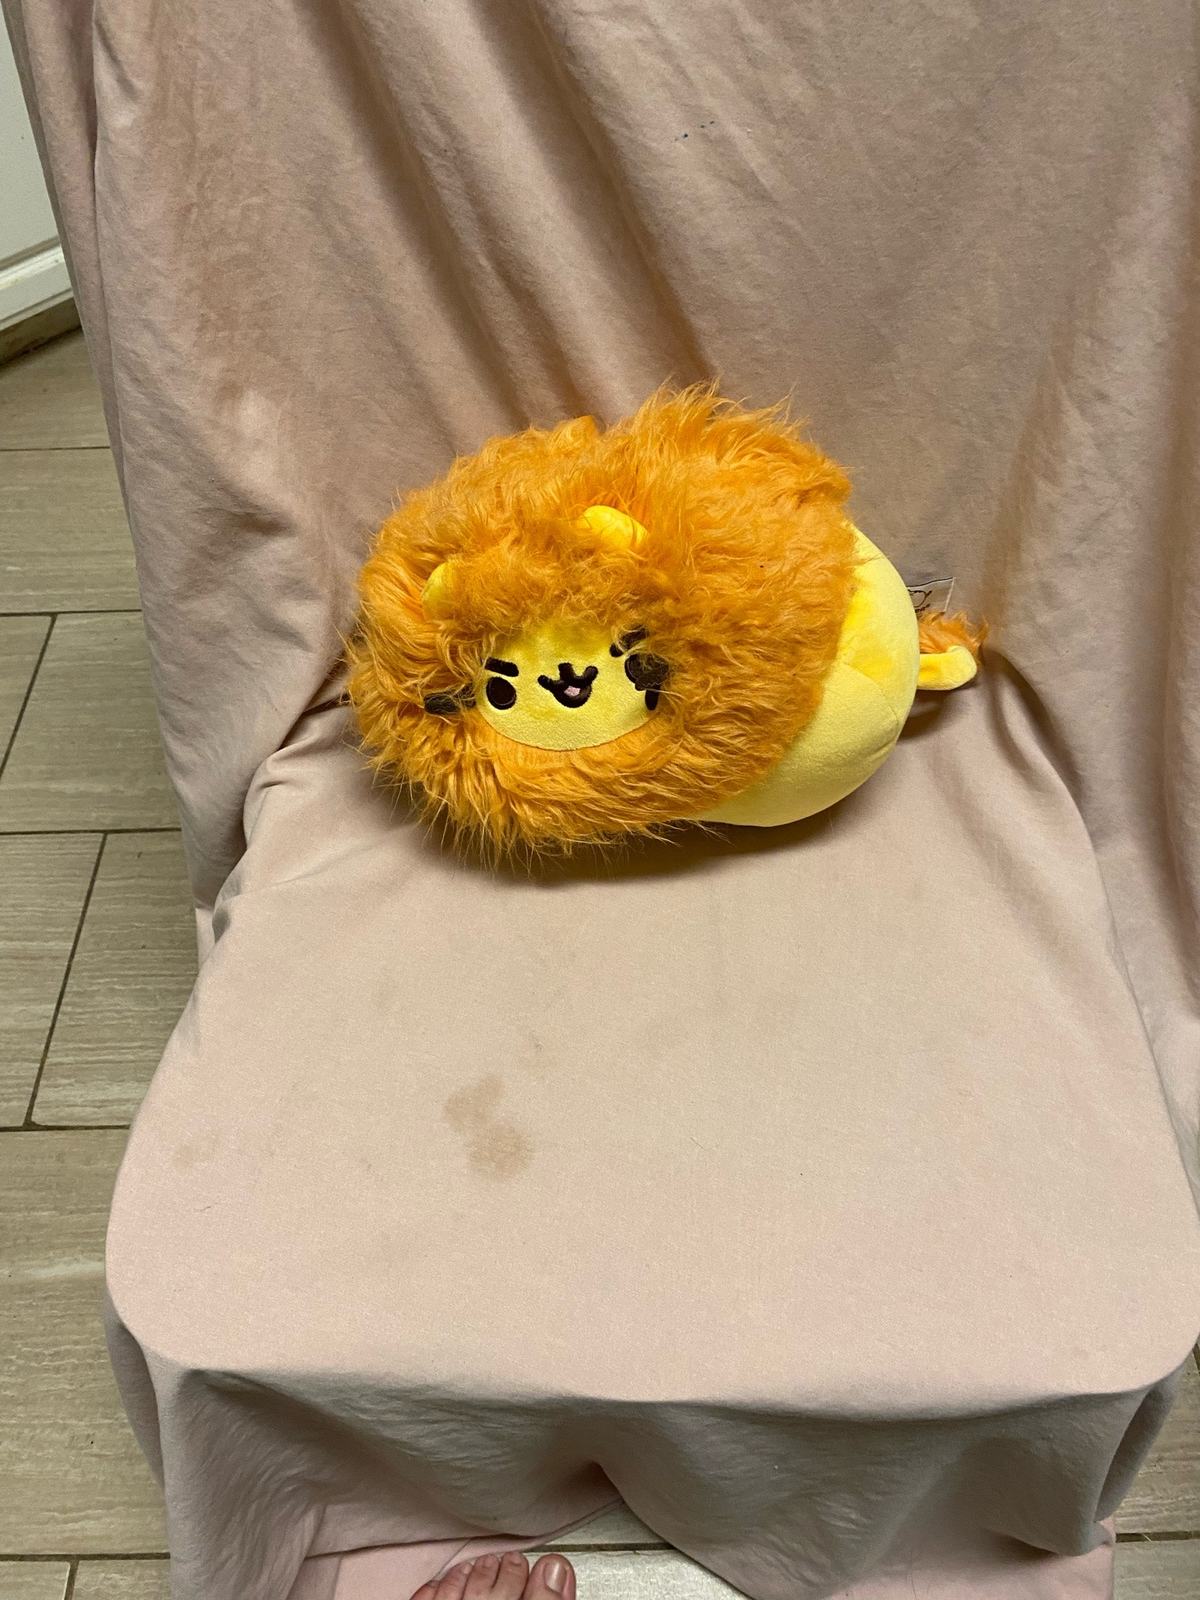 Pusheen 10" Lion Cat Plush by Gund 2018 Yellow Orange Soft - $14.85